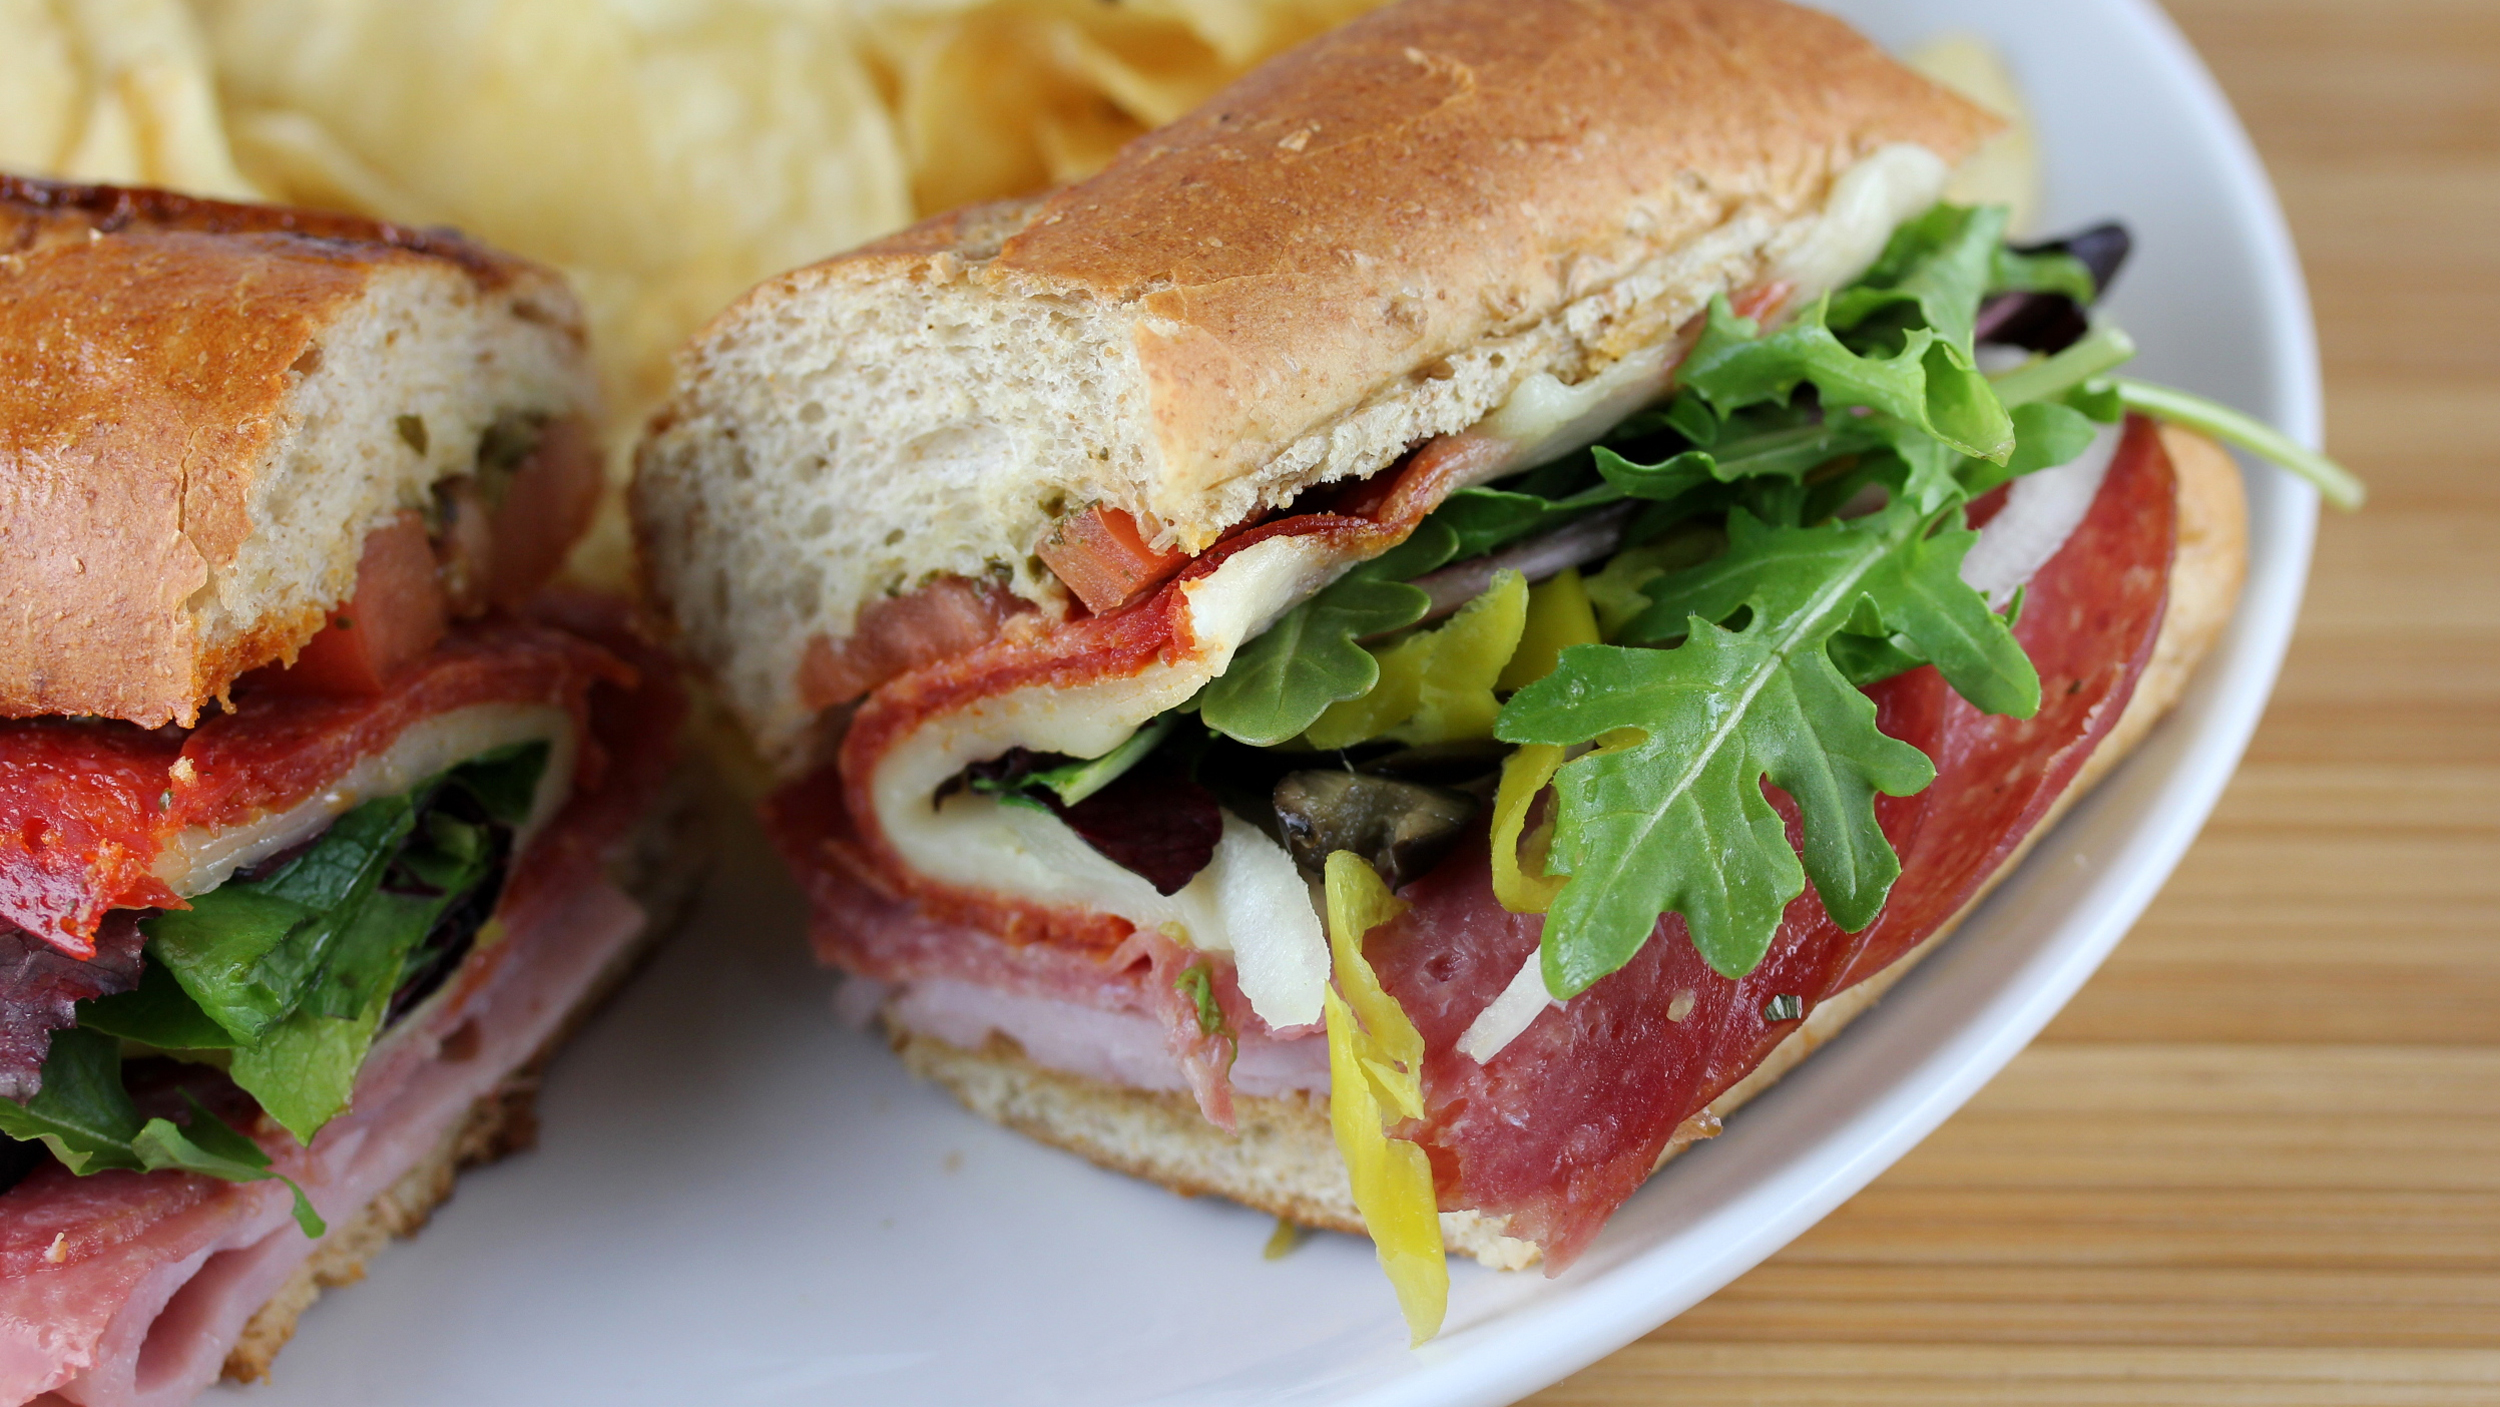 The best sub sandwich recipes: a classic Italian sub, a banh mi 